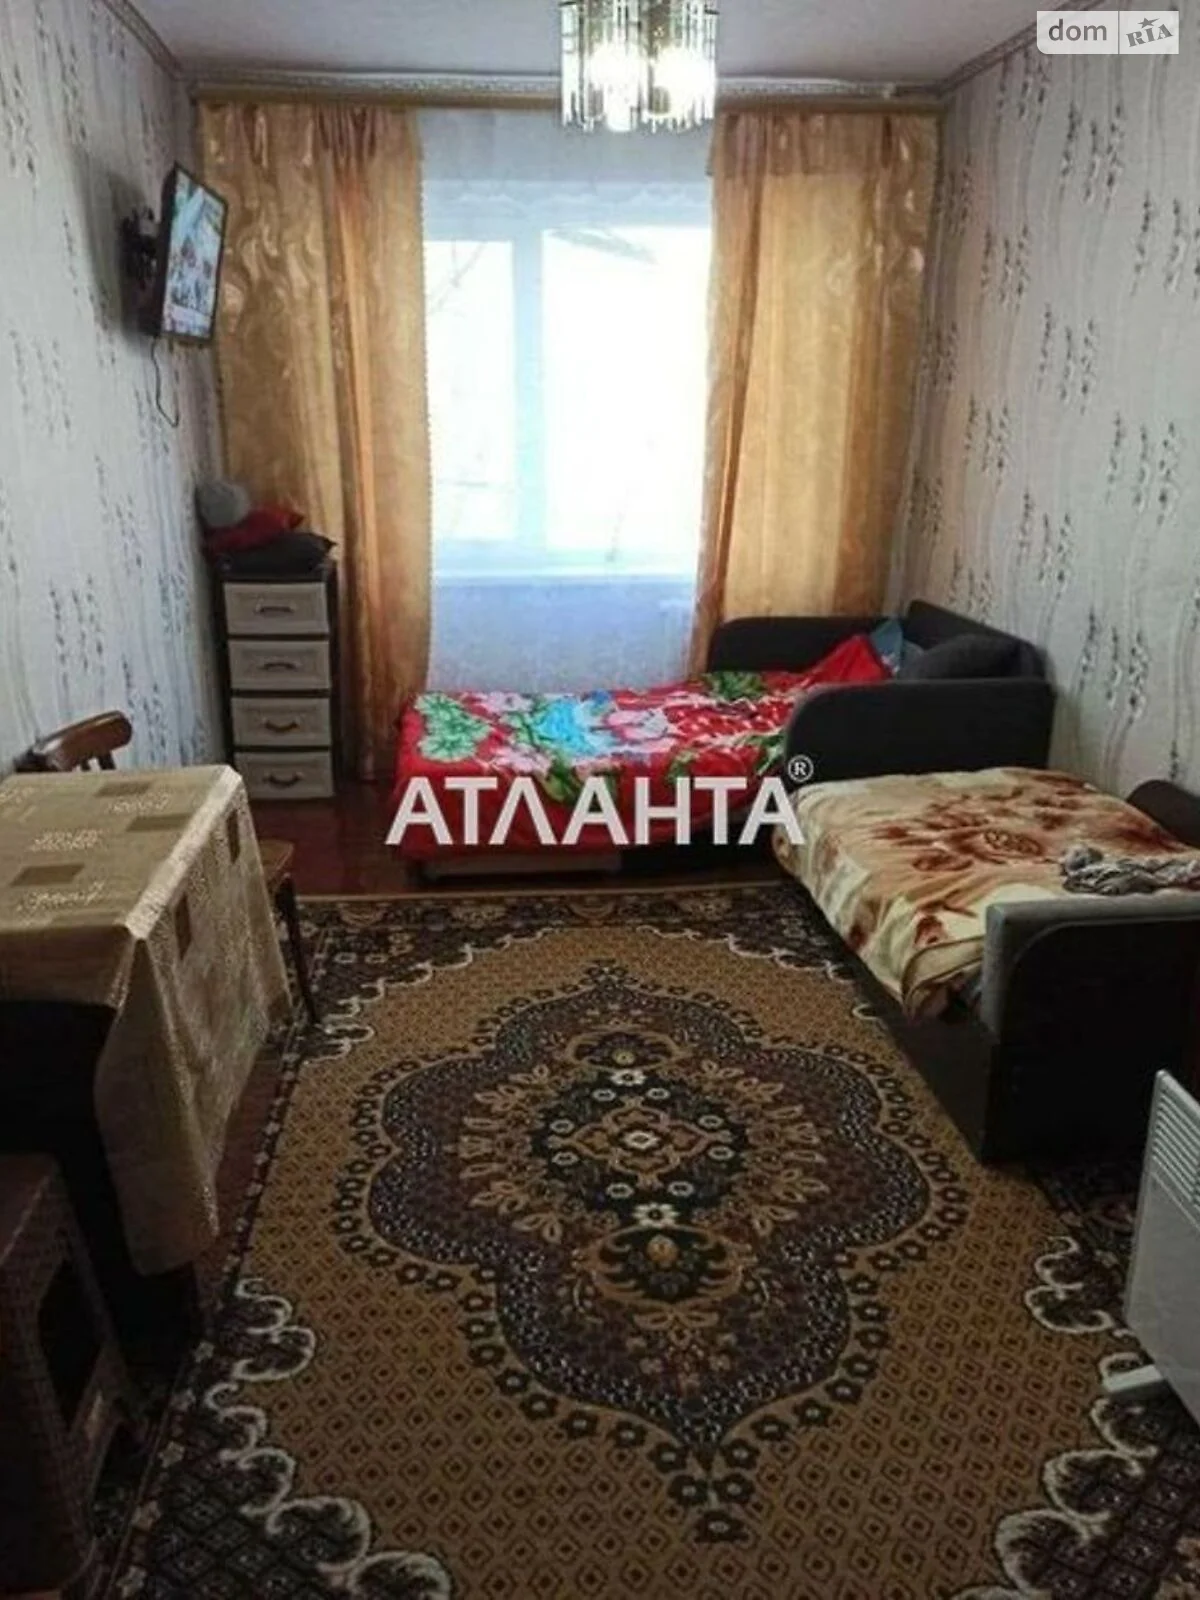 Продается комната 15.8 кв. м в Одессе, цена: 16000 $ - фото 1